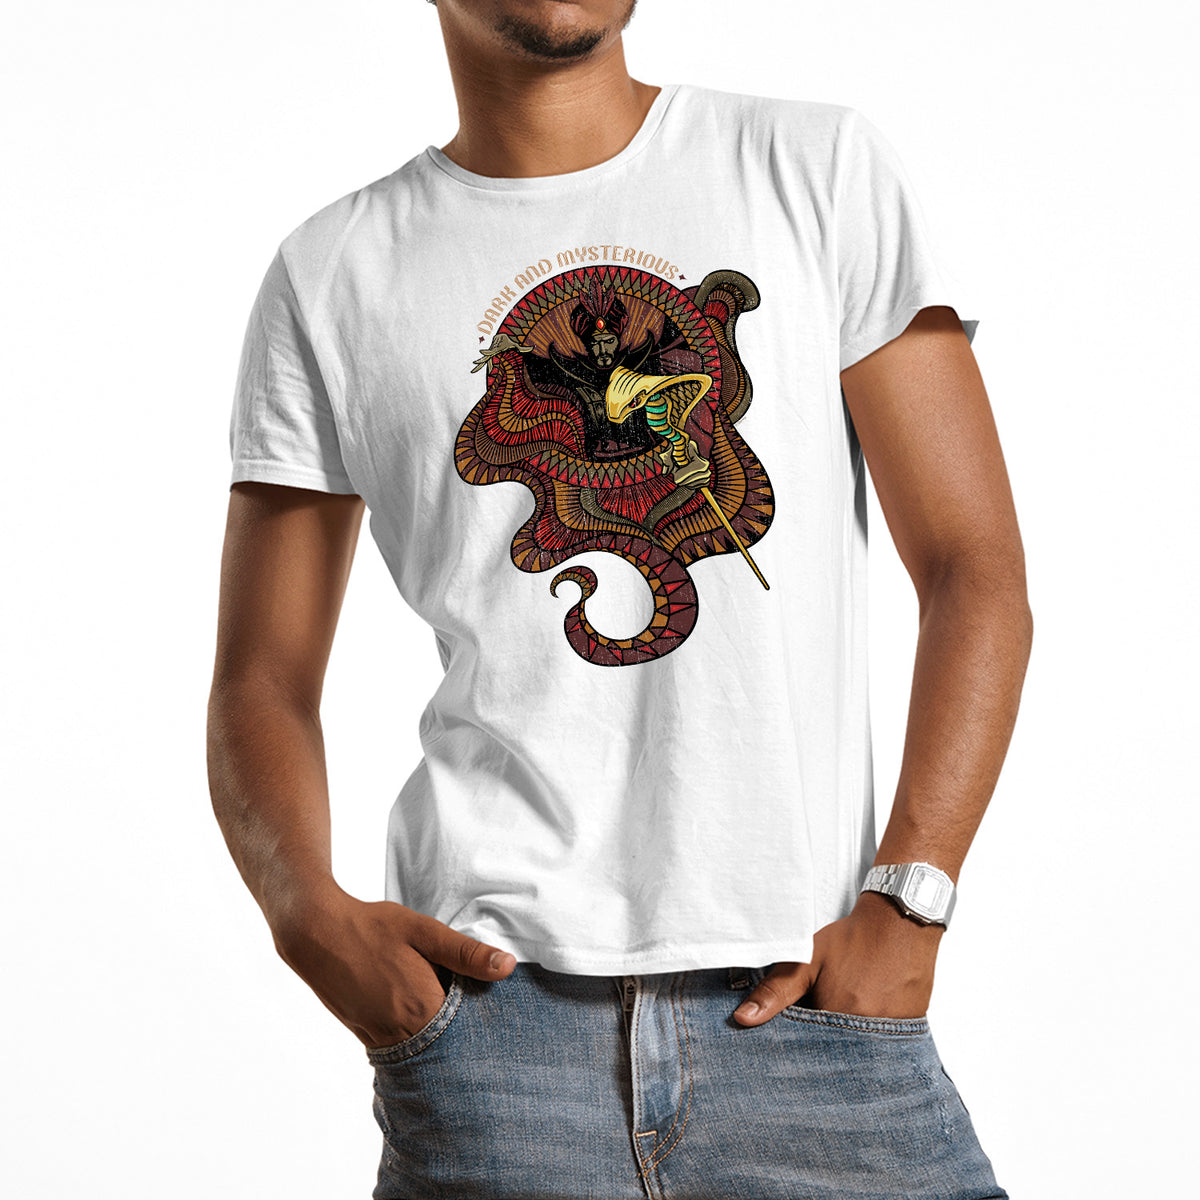 Jaffar Dark And Mysterious | Adult Disney T-Shirt Chroma Clothing